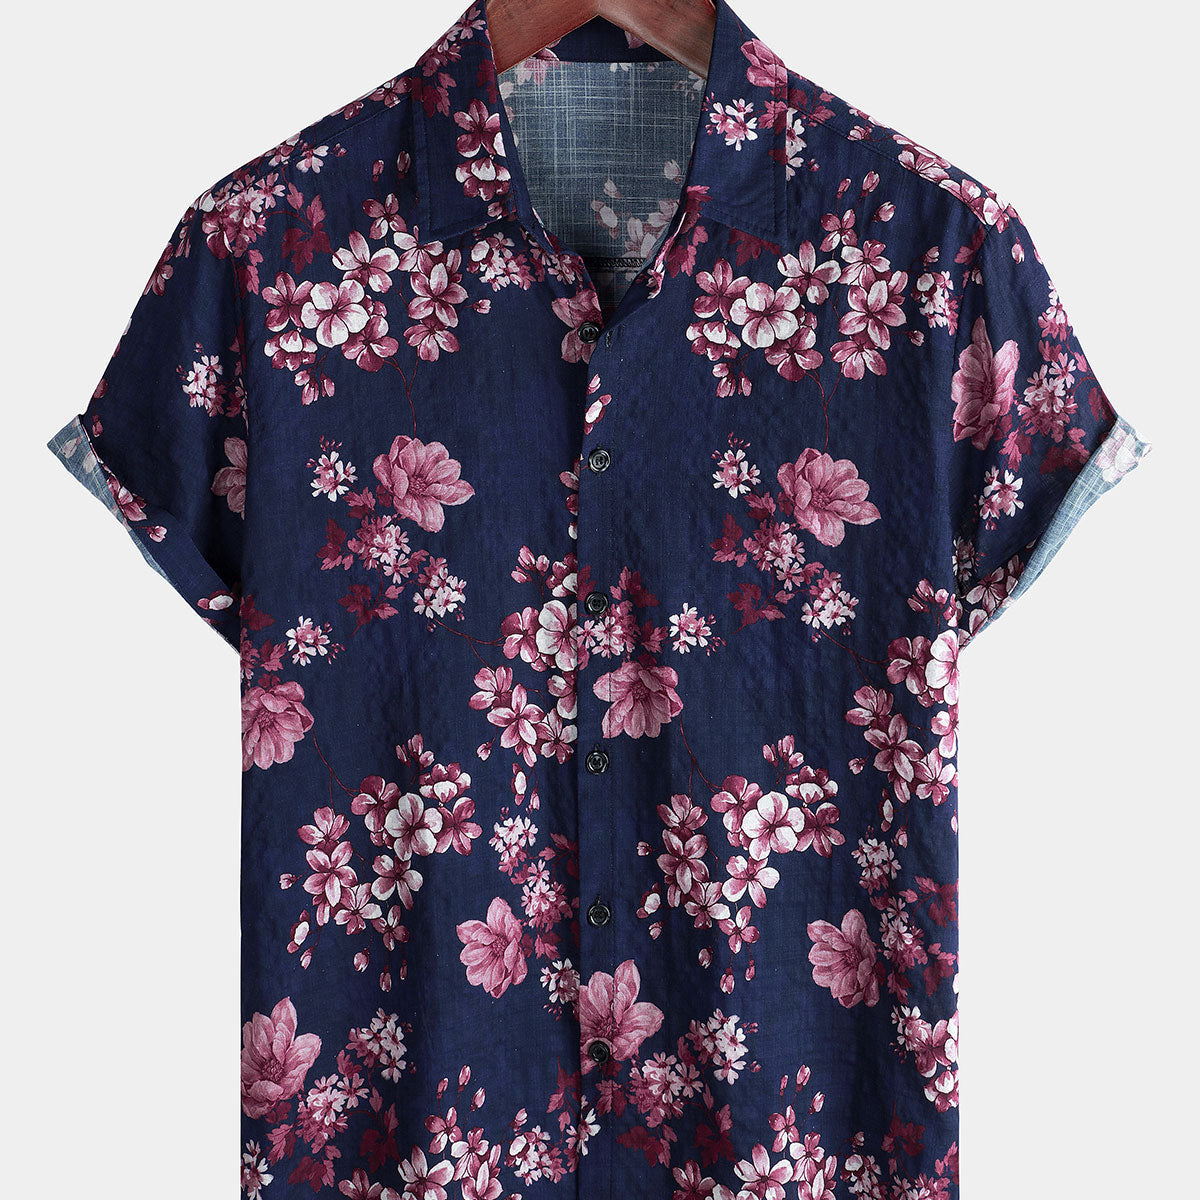 Men's Floral Short Sleeve Casual Cotton Beach Shirt